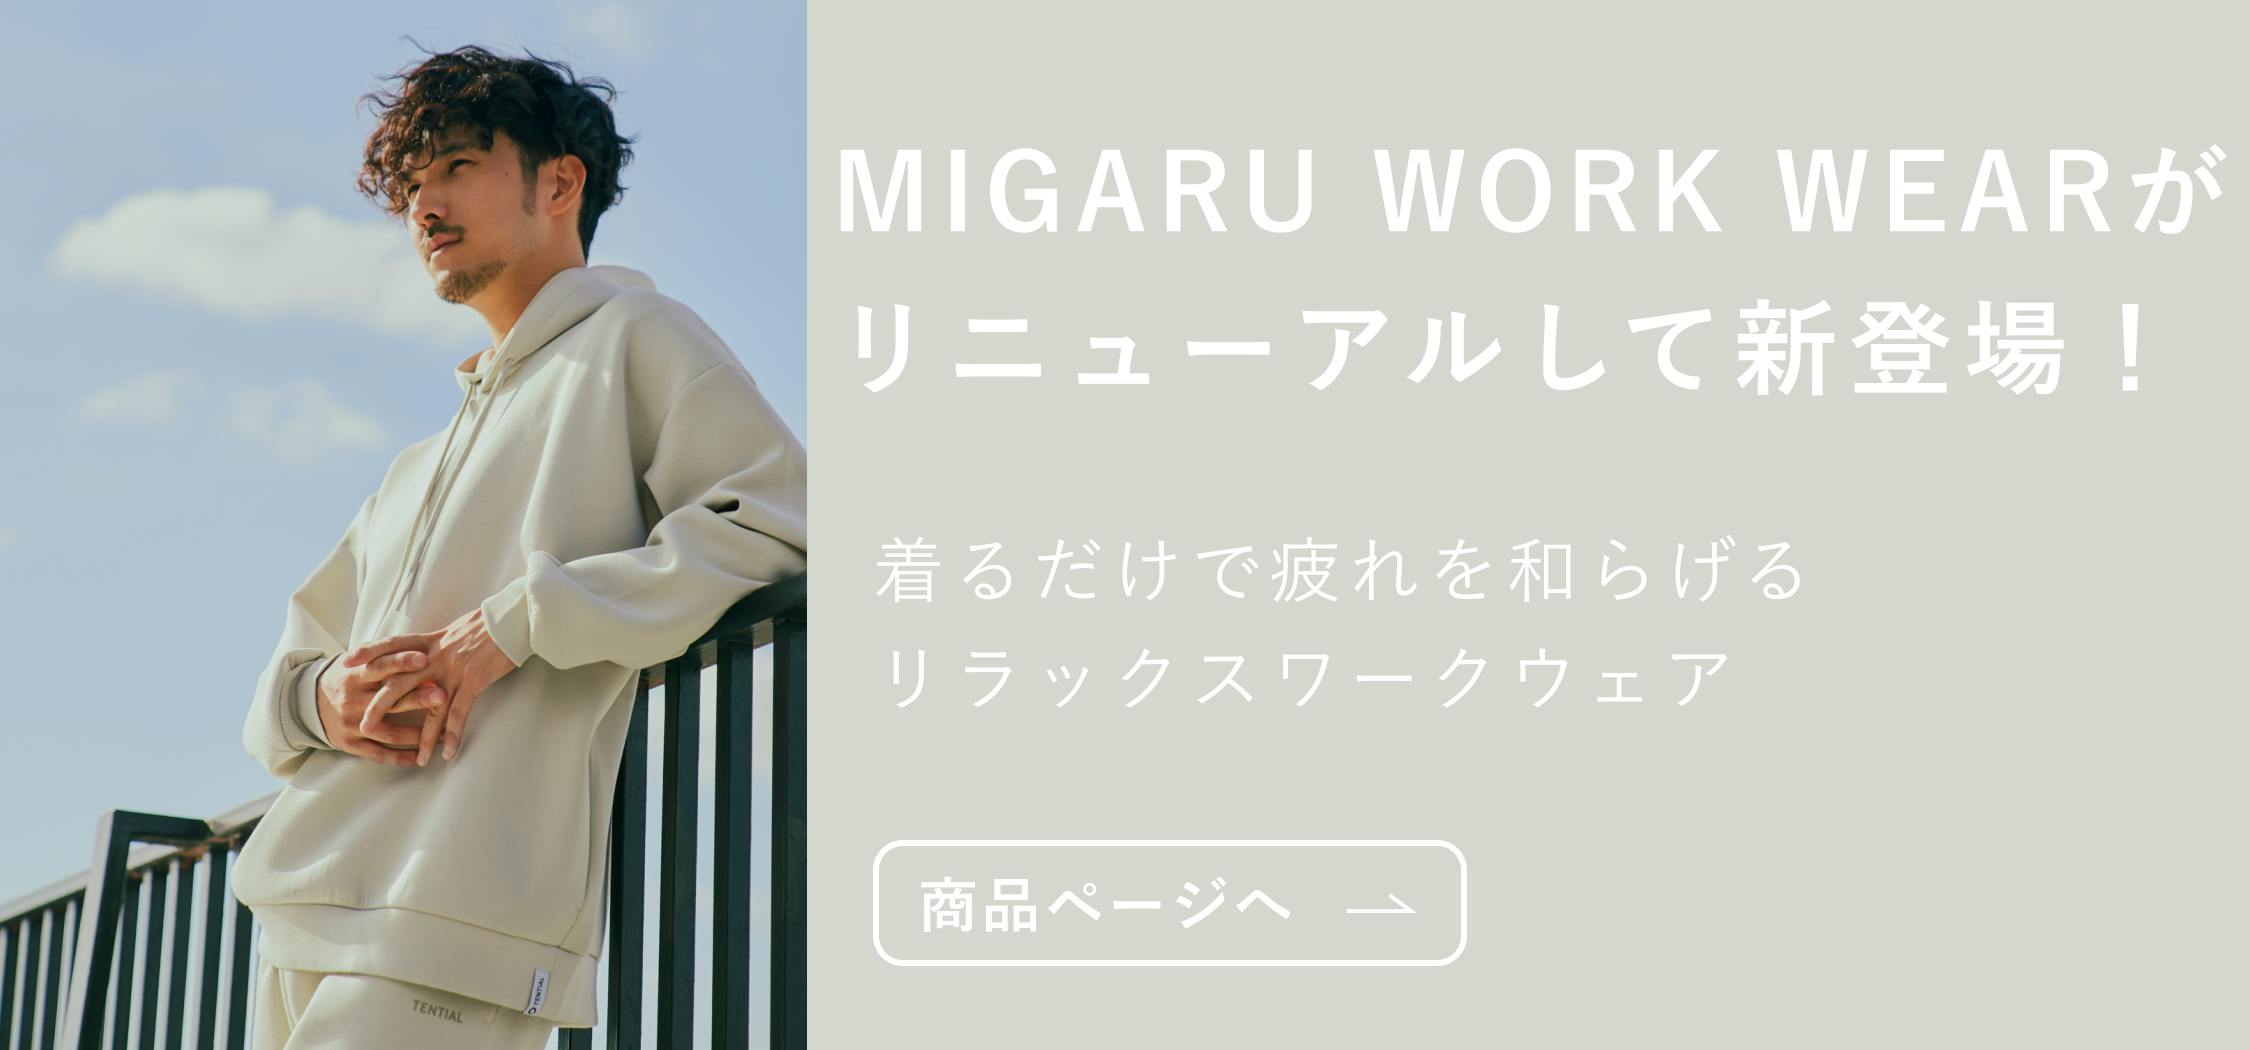 60%OFF!】 TENTIAL MIGARU WORK WEAR Jacket ungersshoes.com